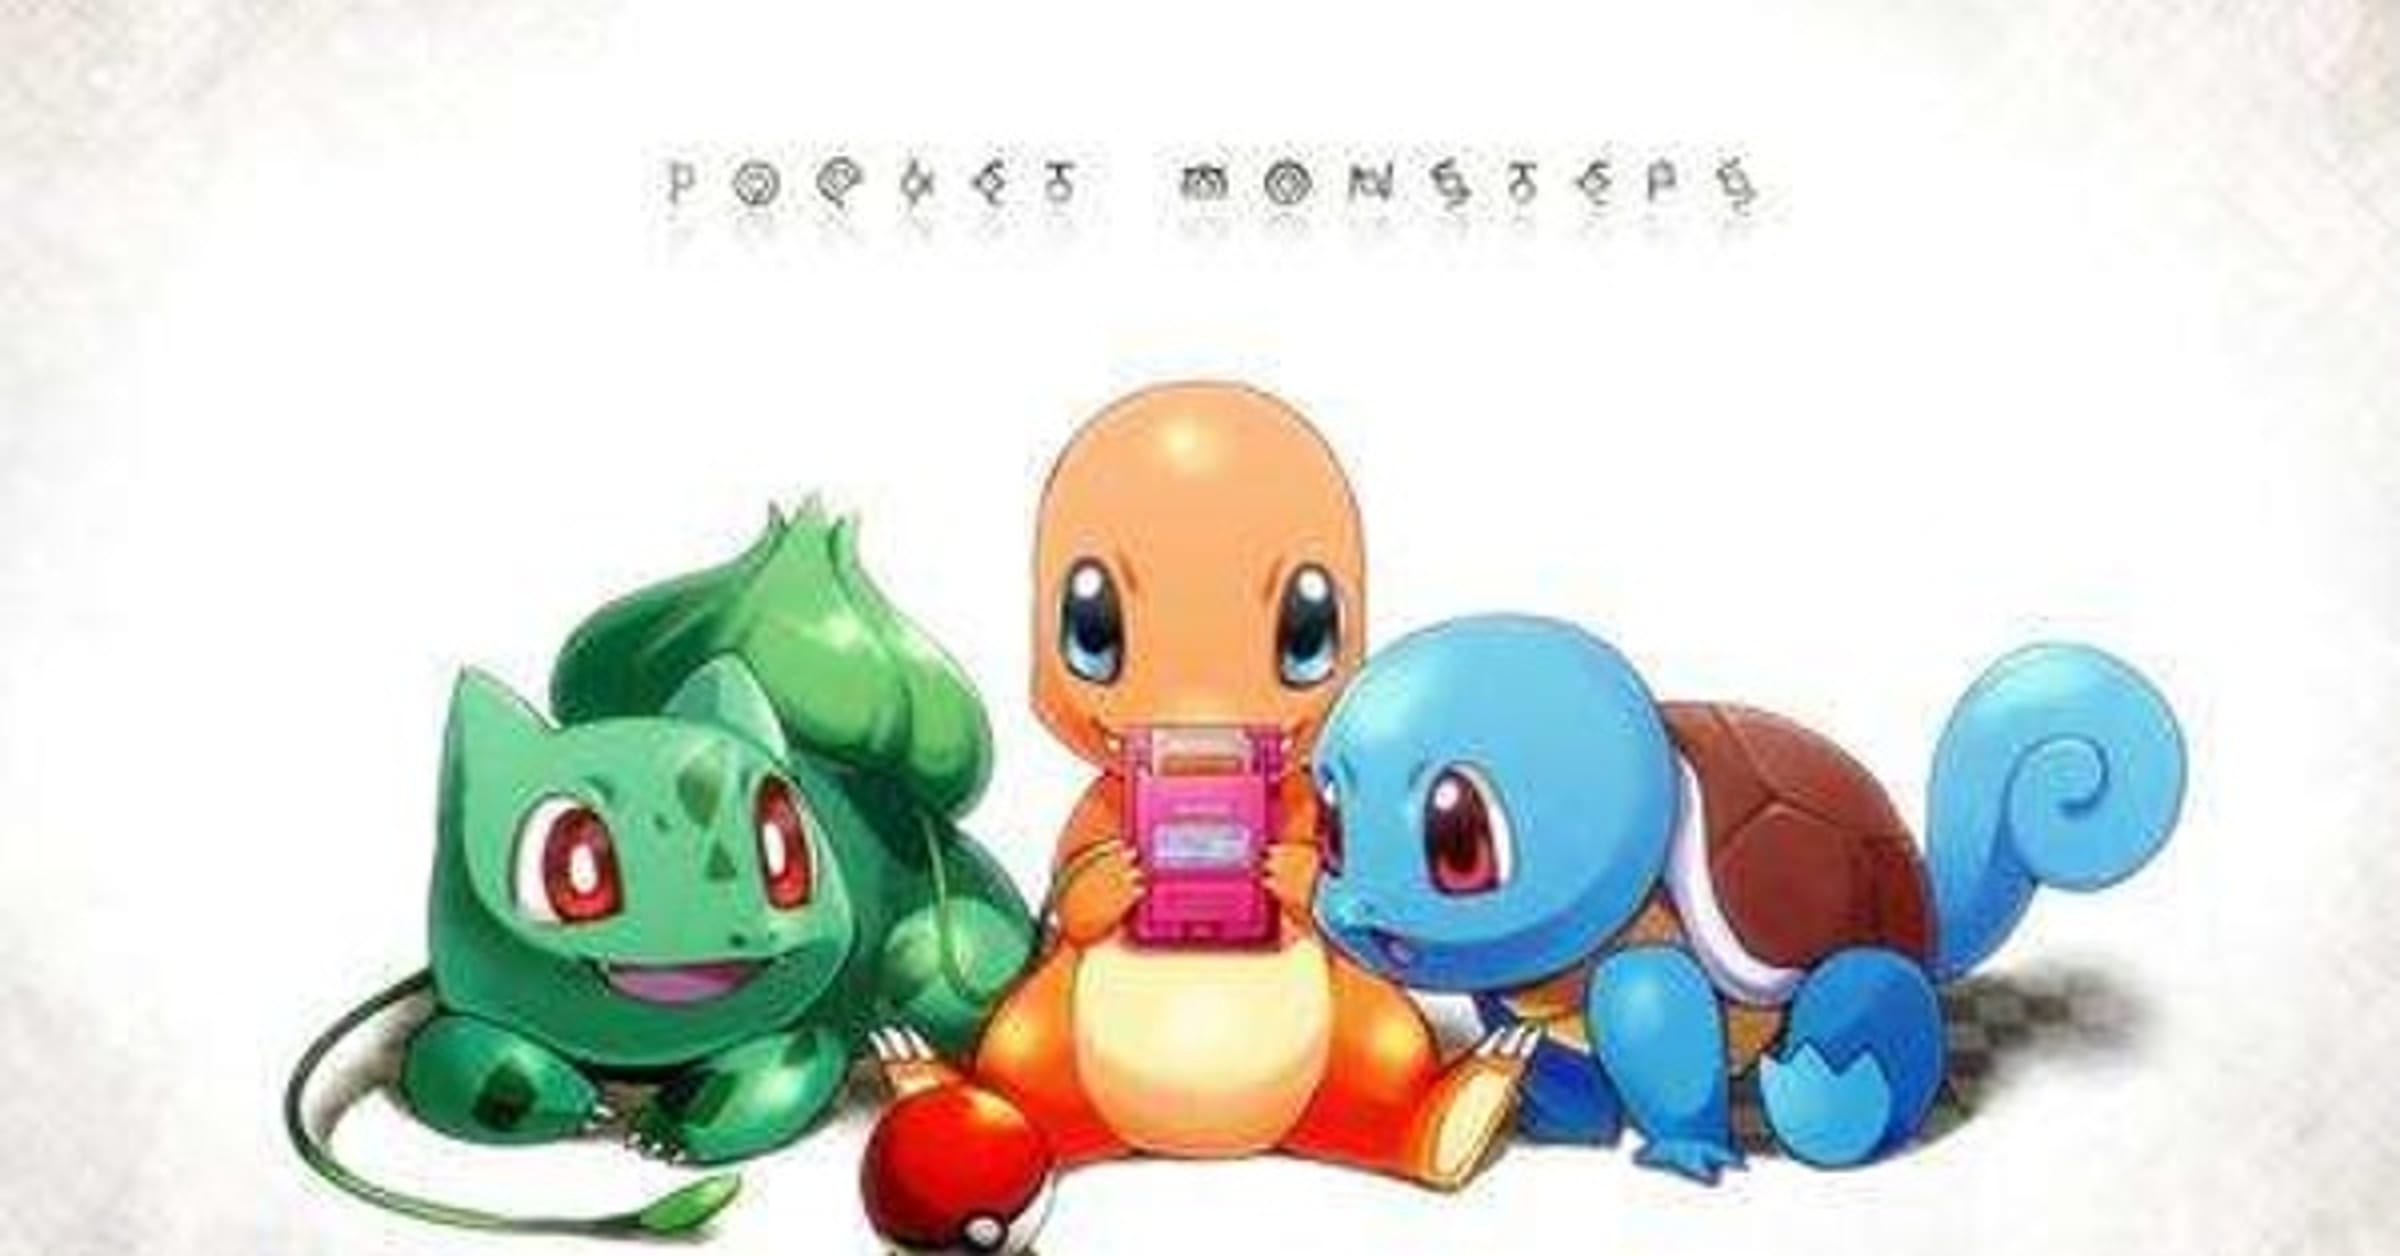  Pokemon - Moltres (27) - Fossil : Toys & Games